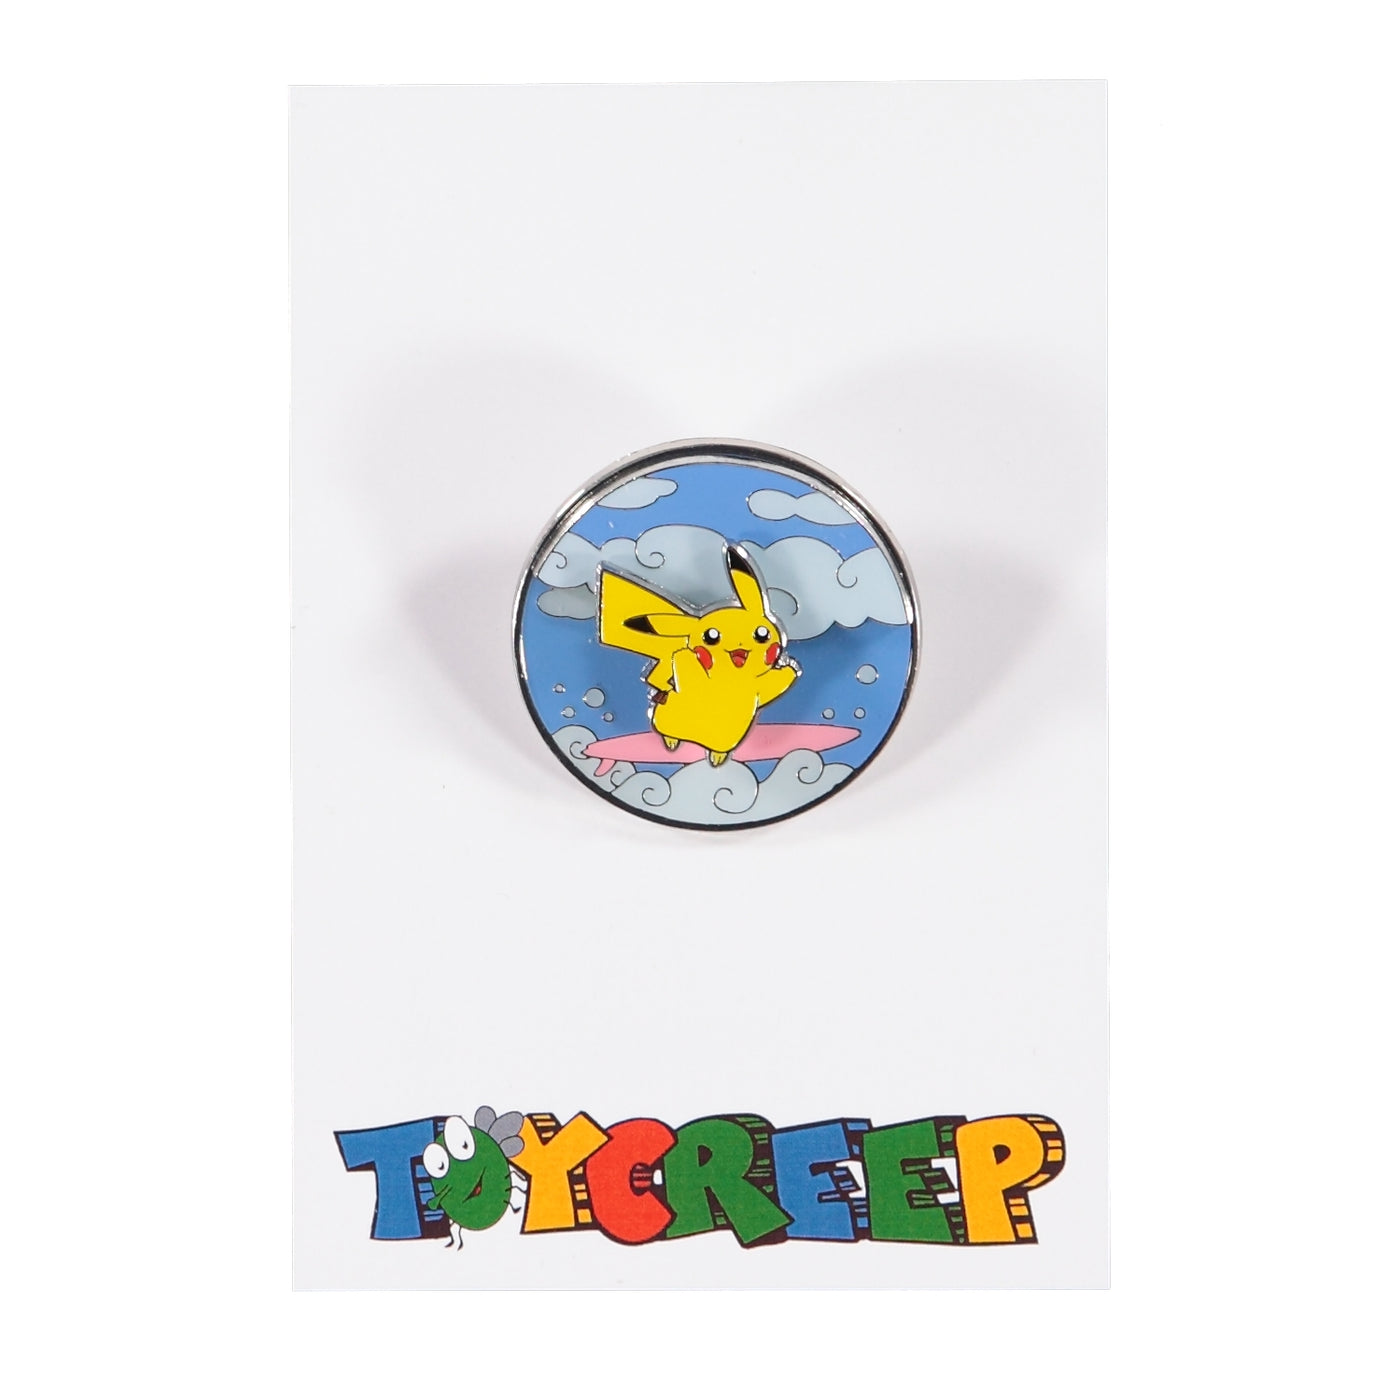 Pokemon TCG Celebrations 25th Anniversary Flying/Surfing Pikachu Pin Badge